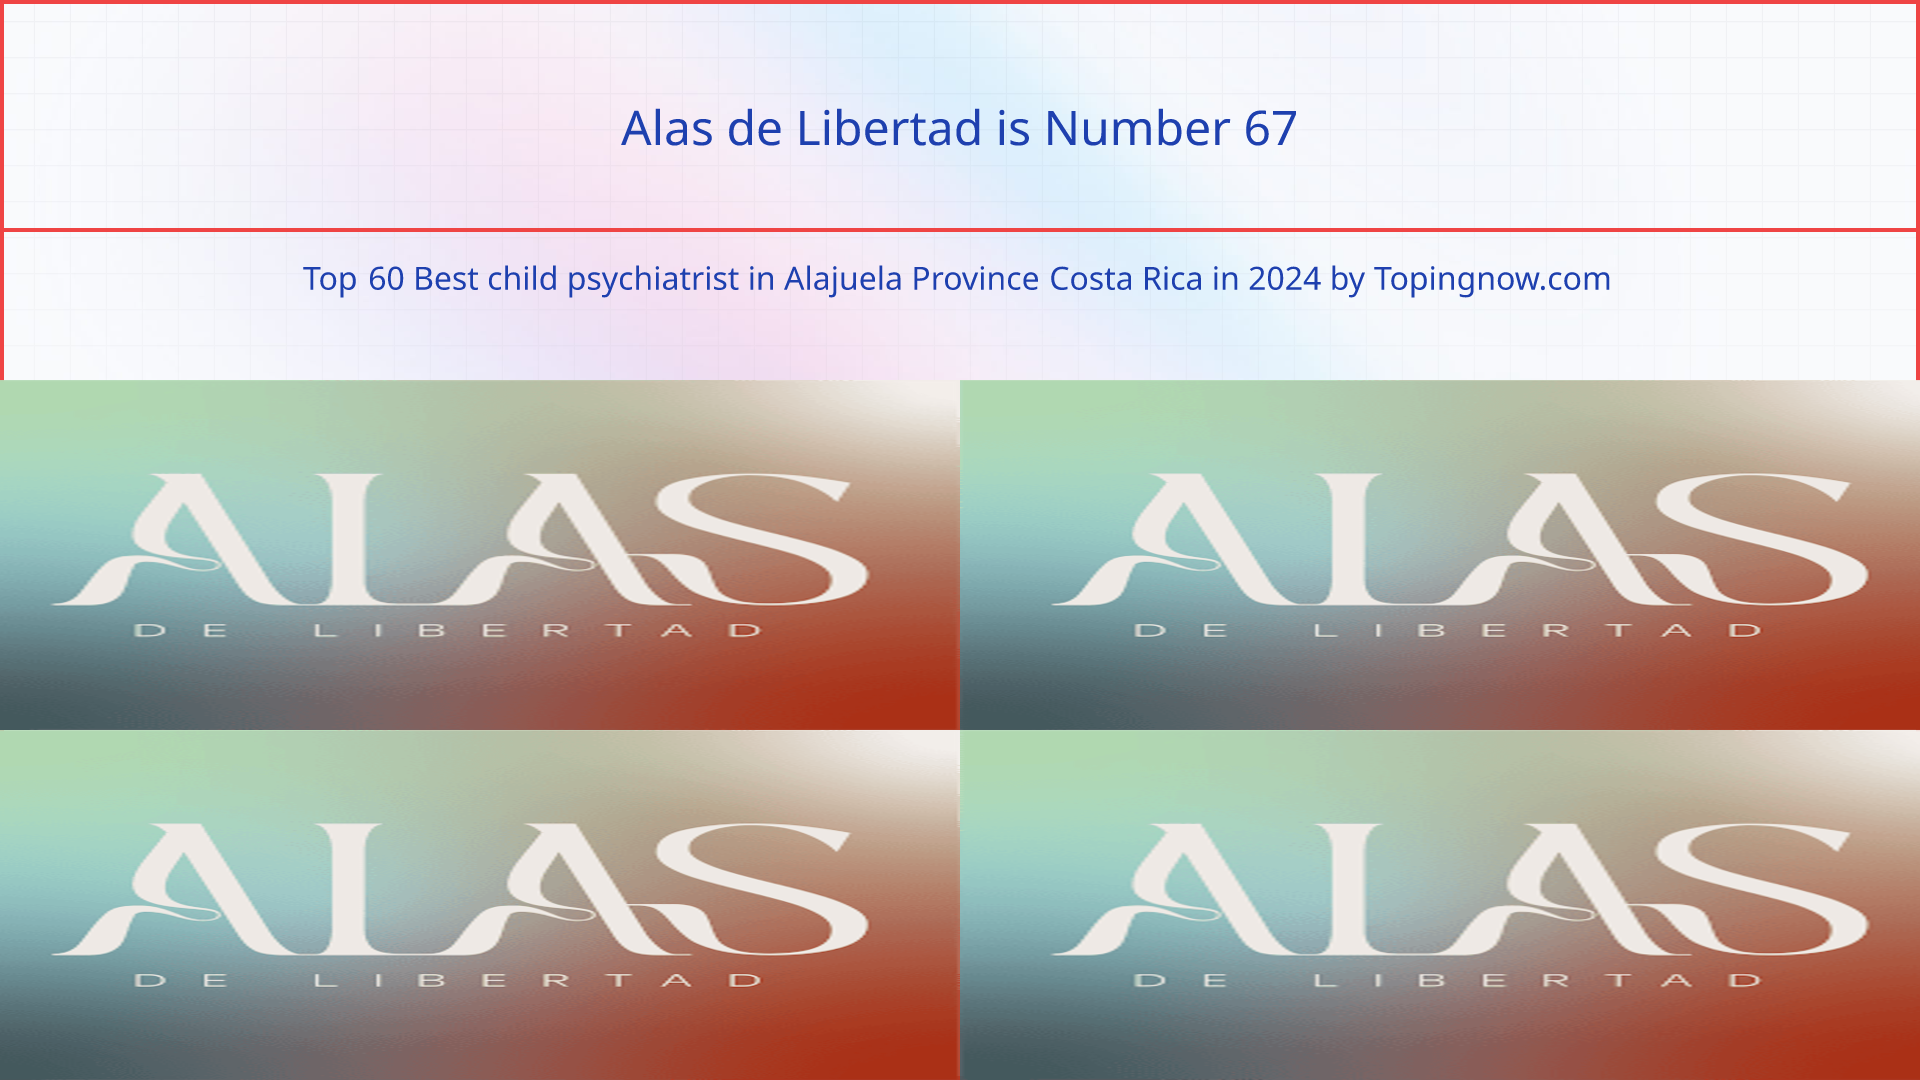 Alas de Libertad: Top 60 Best child psychiatrist in Alajuela Province Costa Rica in 2024